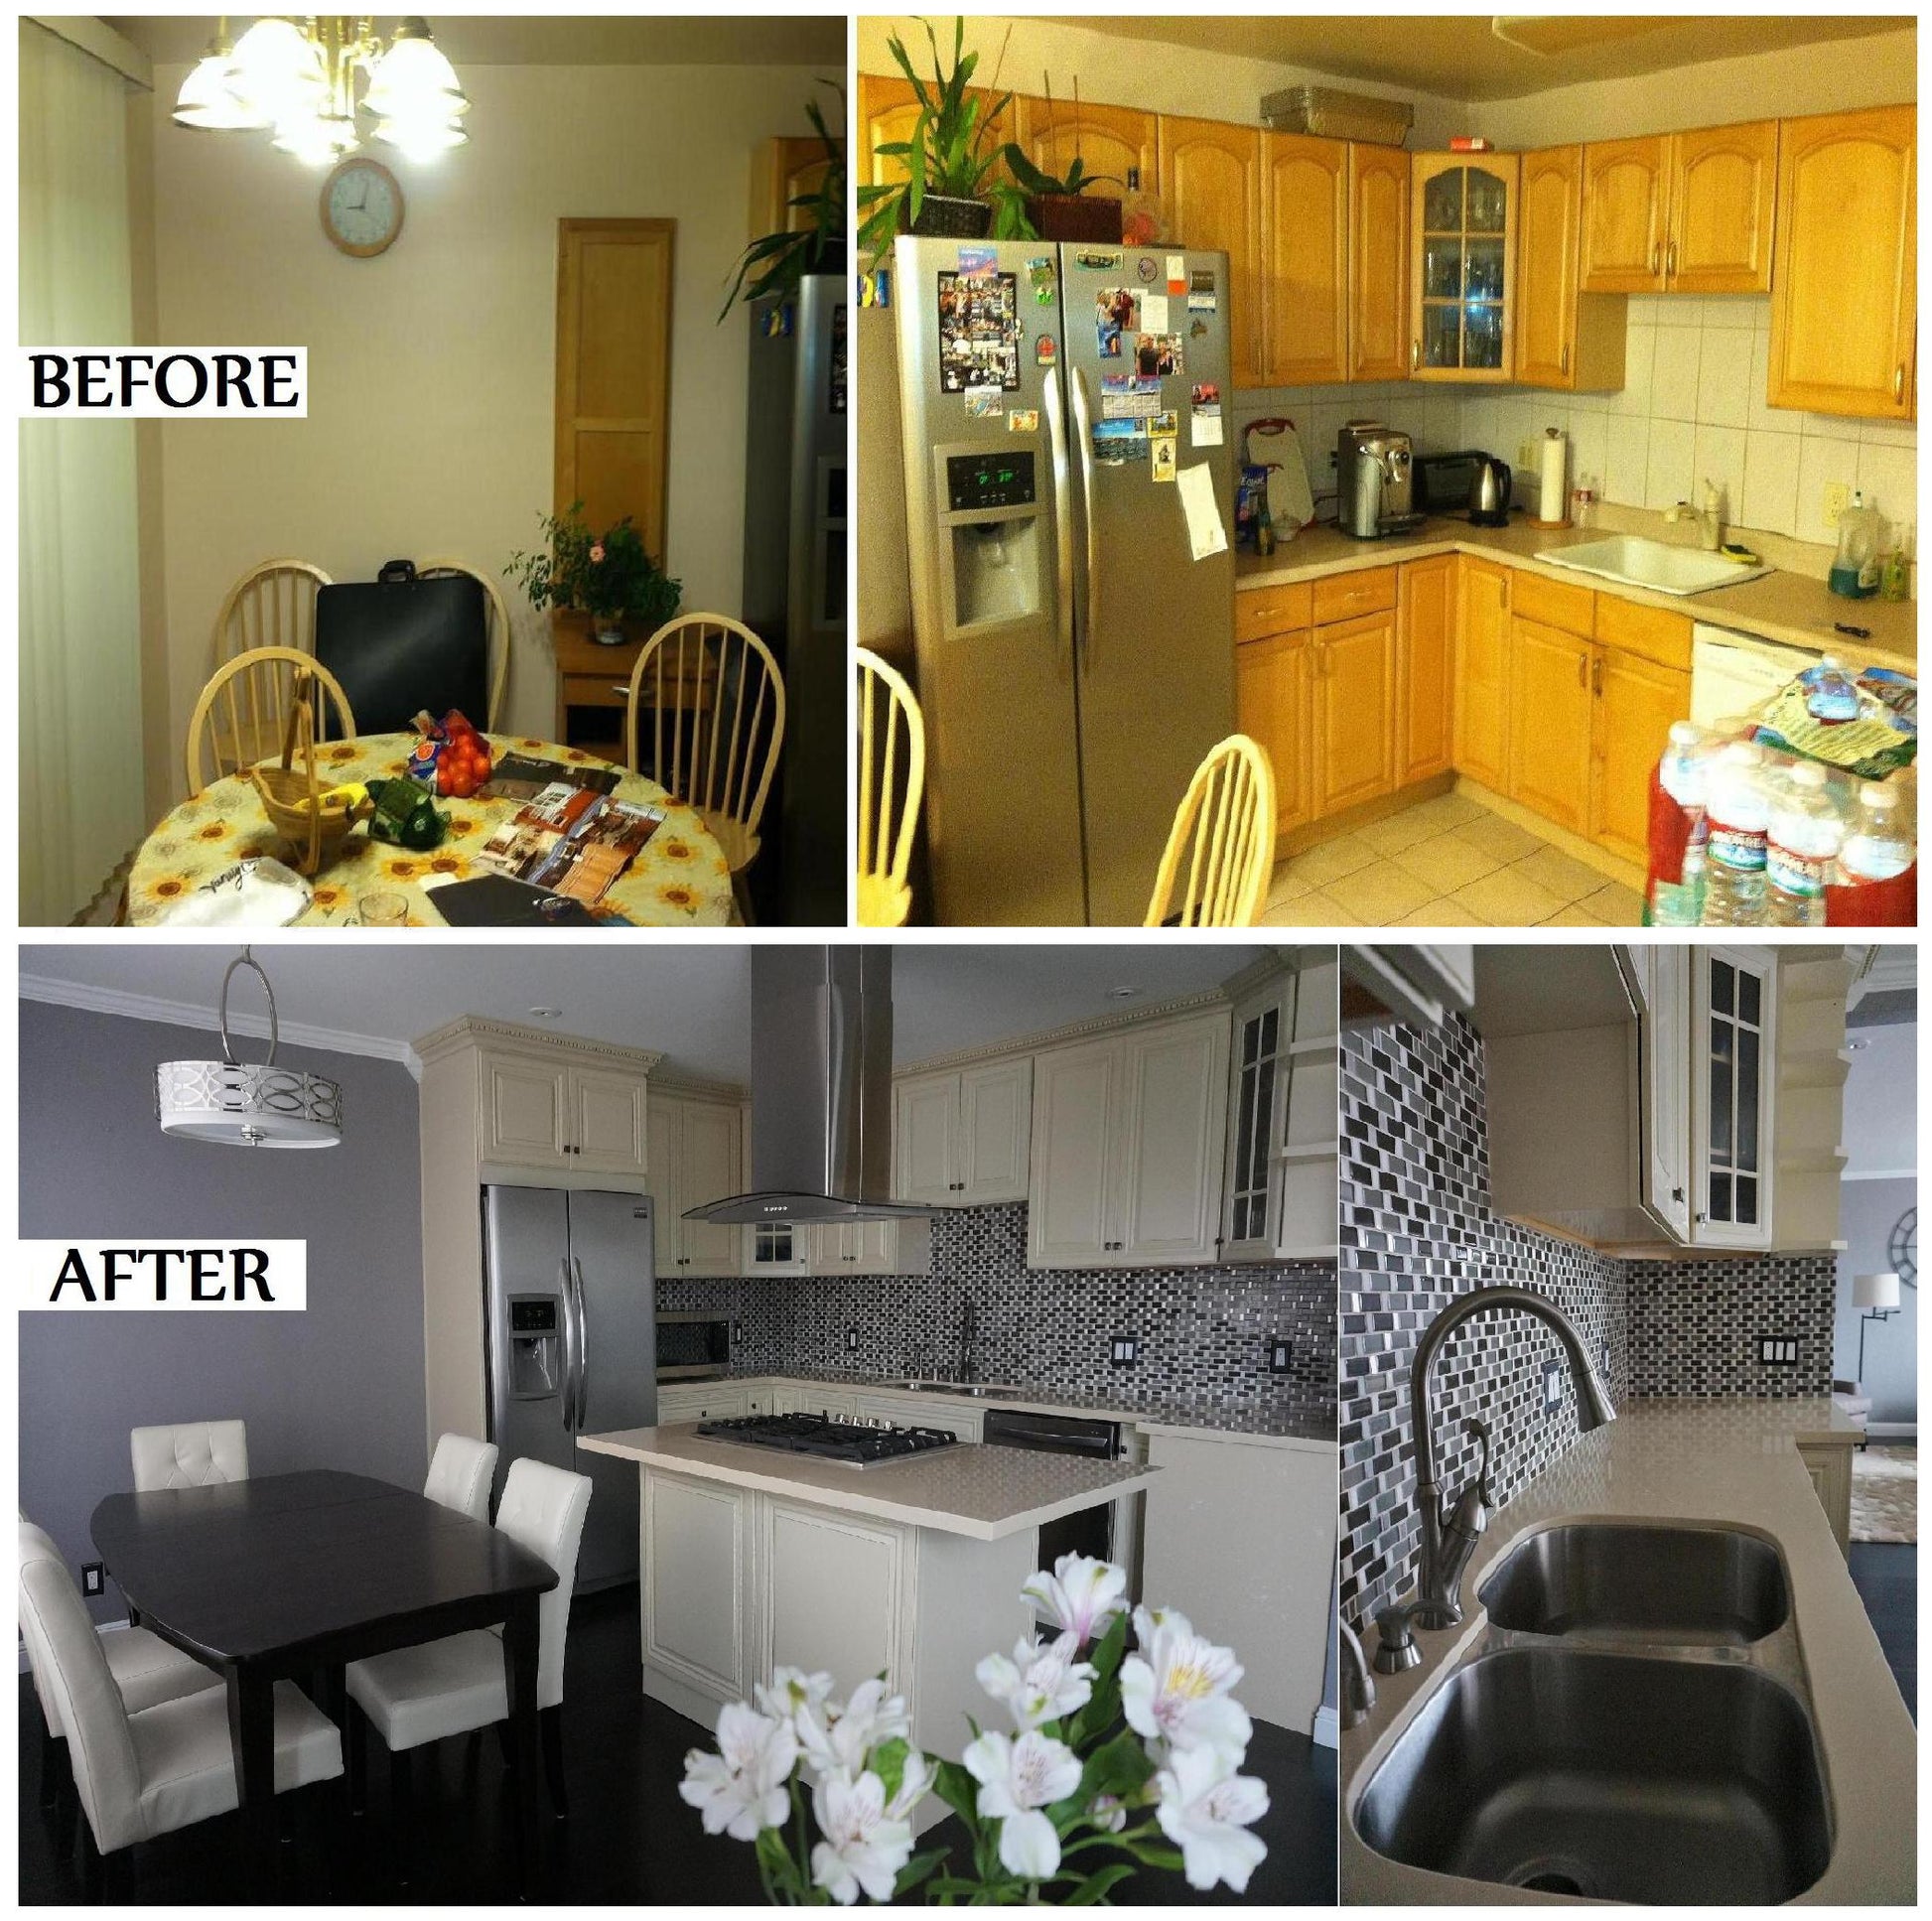 Outer Parkside Kitchen Remodel - Grats Decor Interior Design & Build Inc.